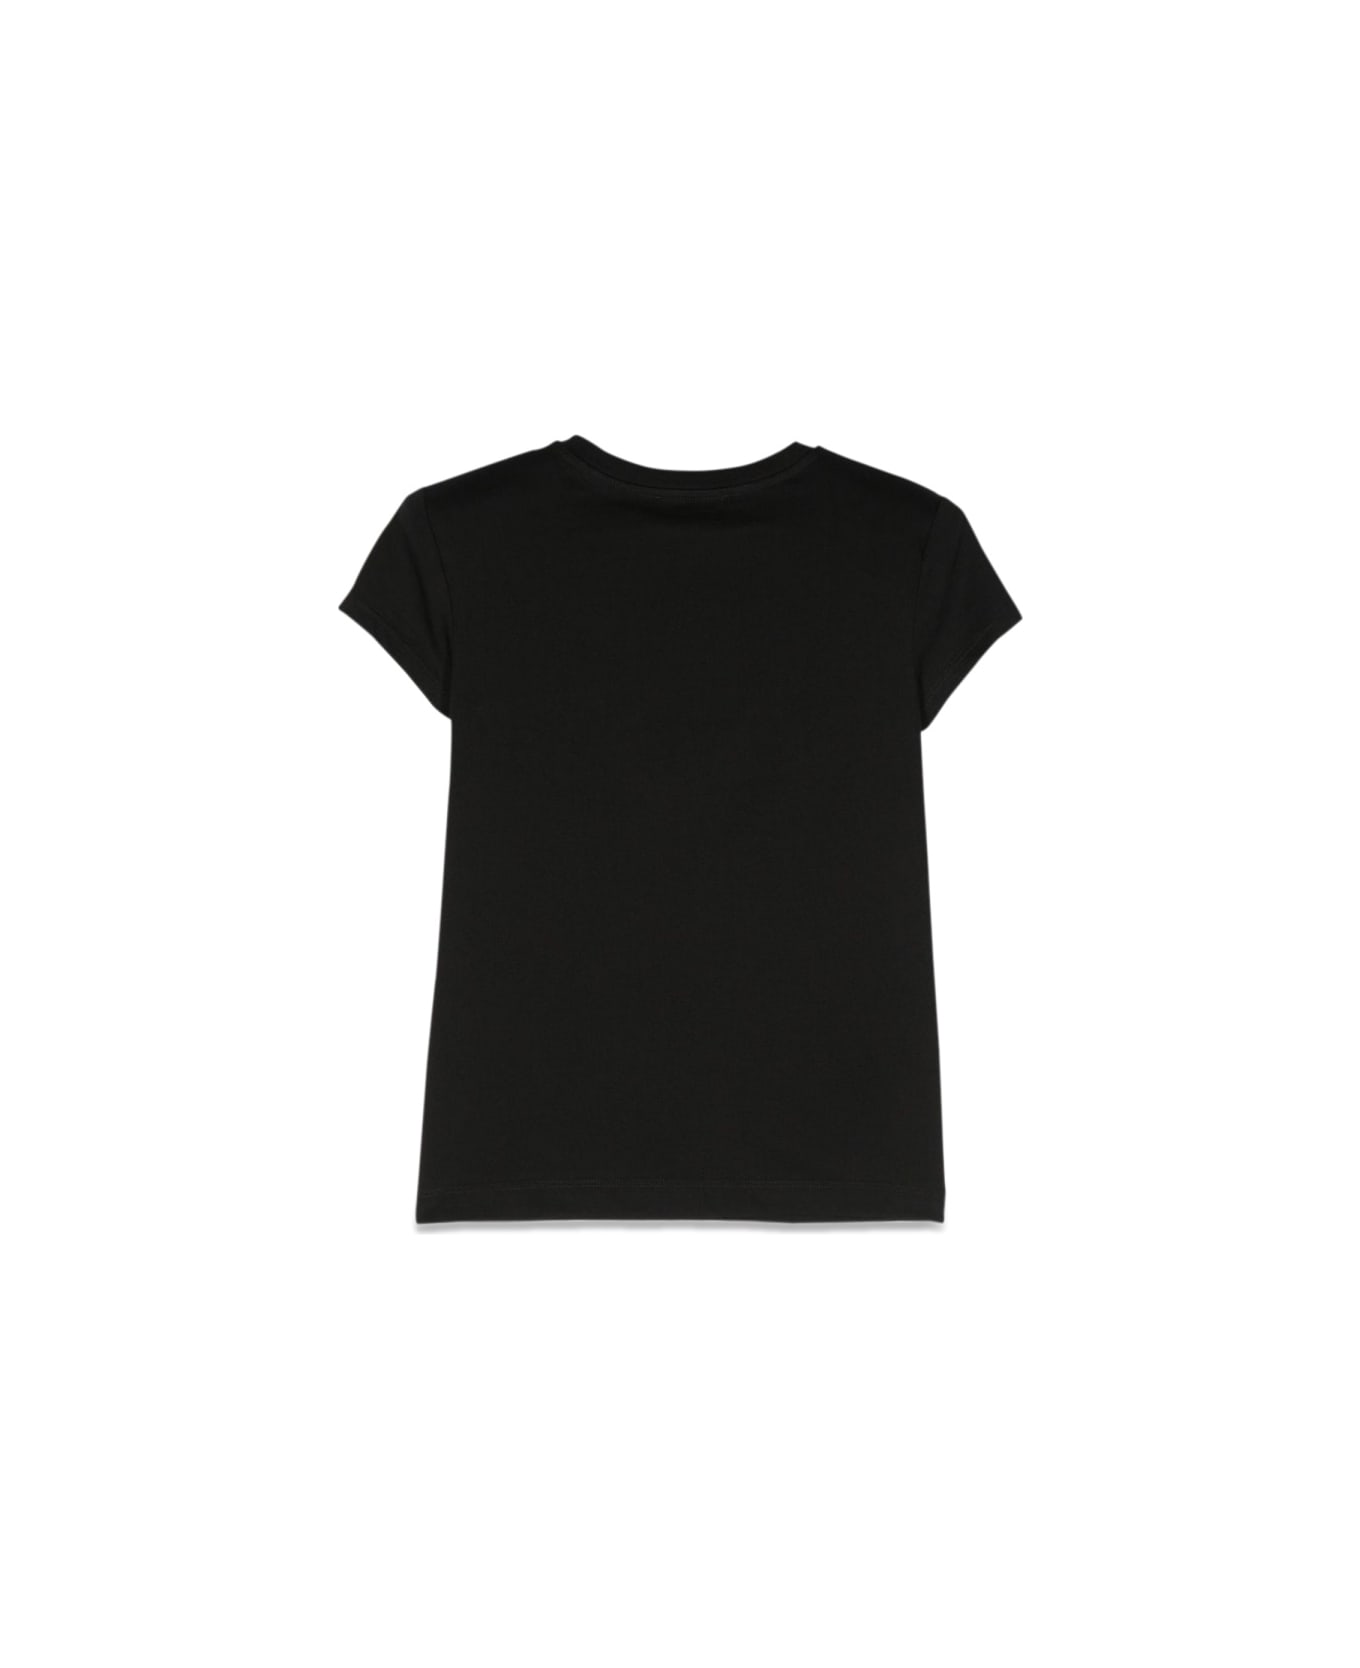 Balmain Mc Logo T-shirt - BLACK